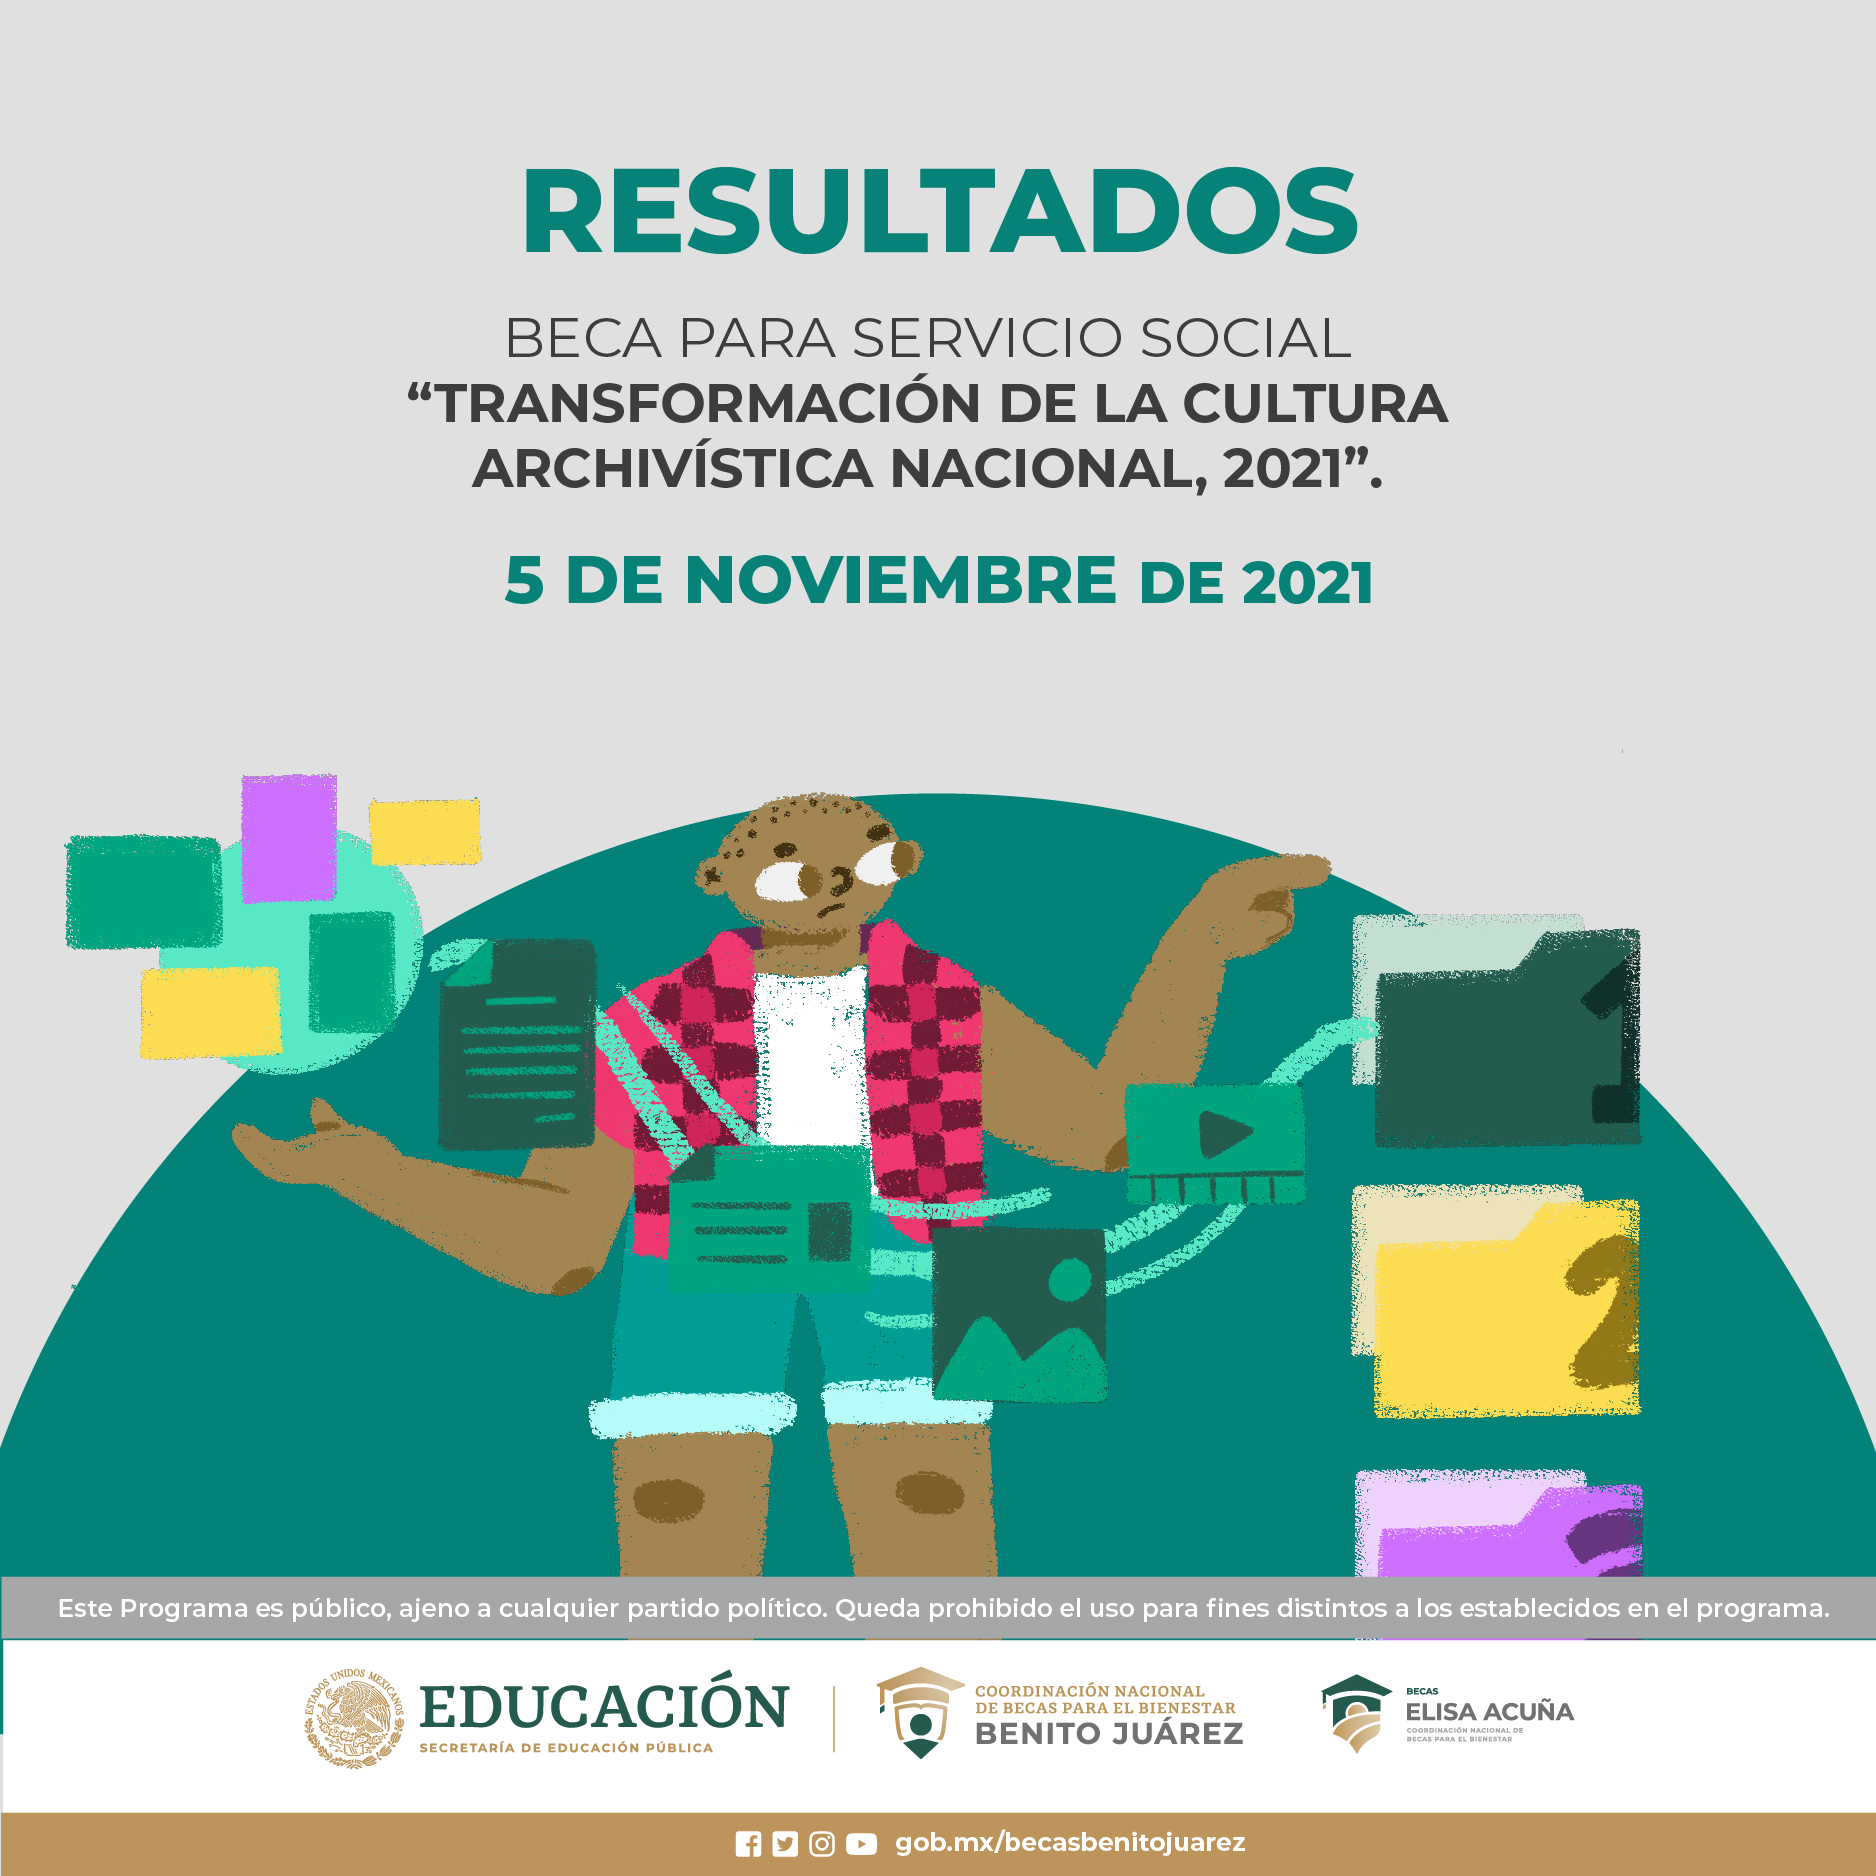 /cms/uploads/image/file/683624/resultados_beca_servicio_social_cultura_archivistica_WEB.png